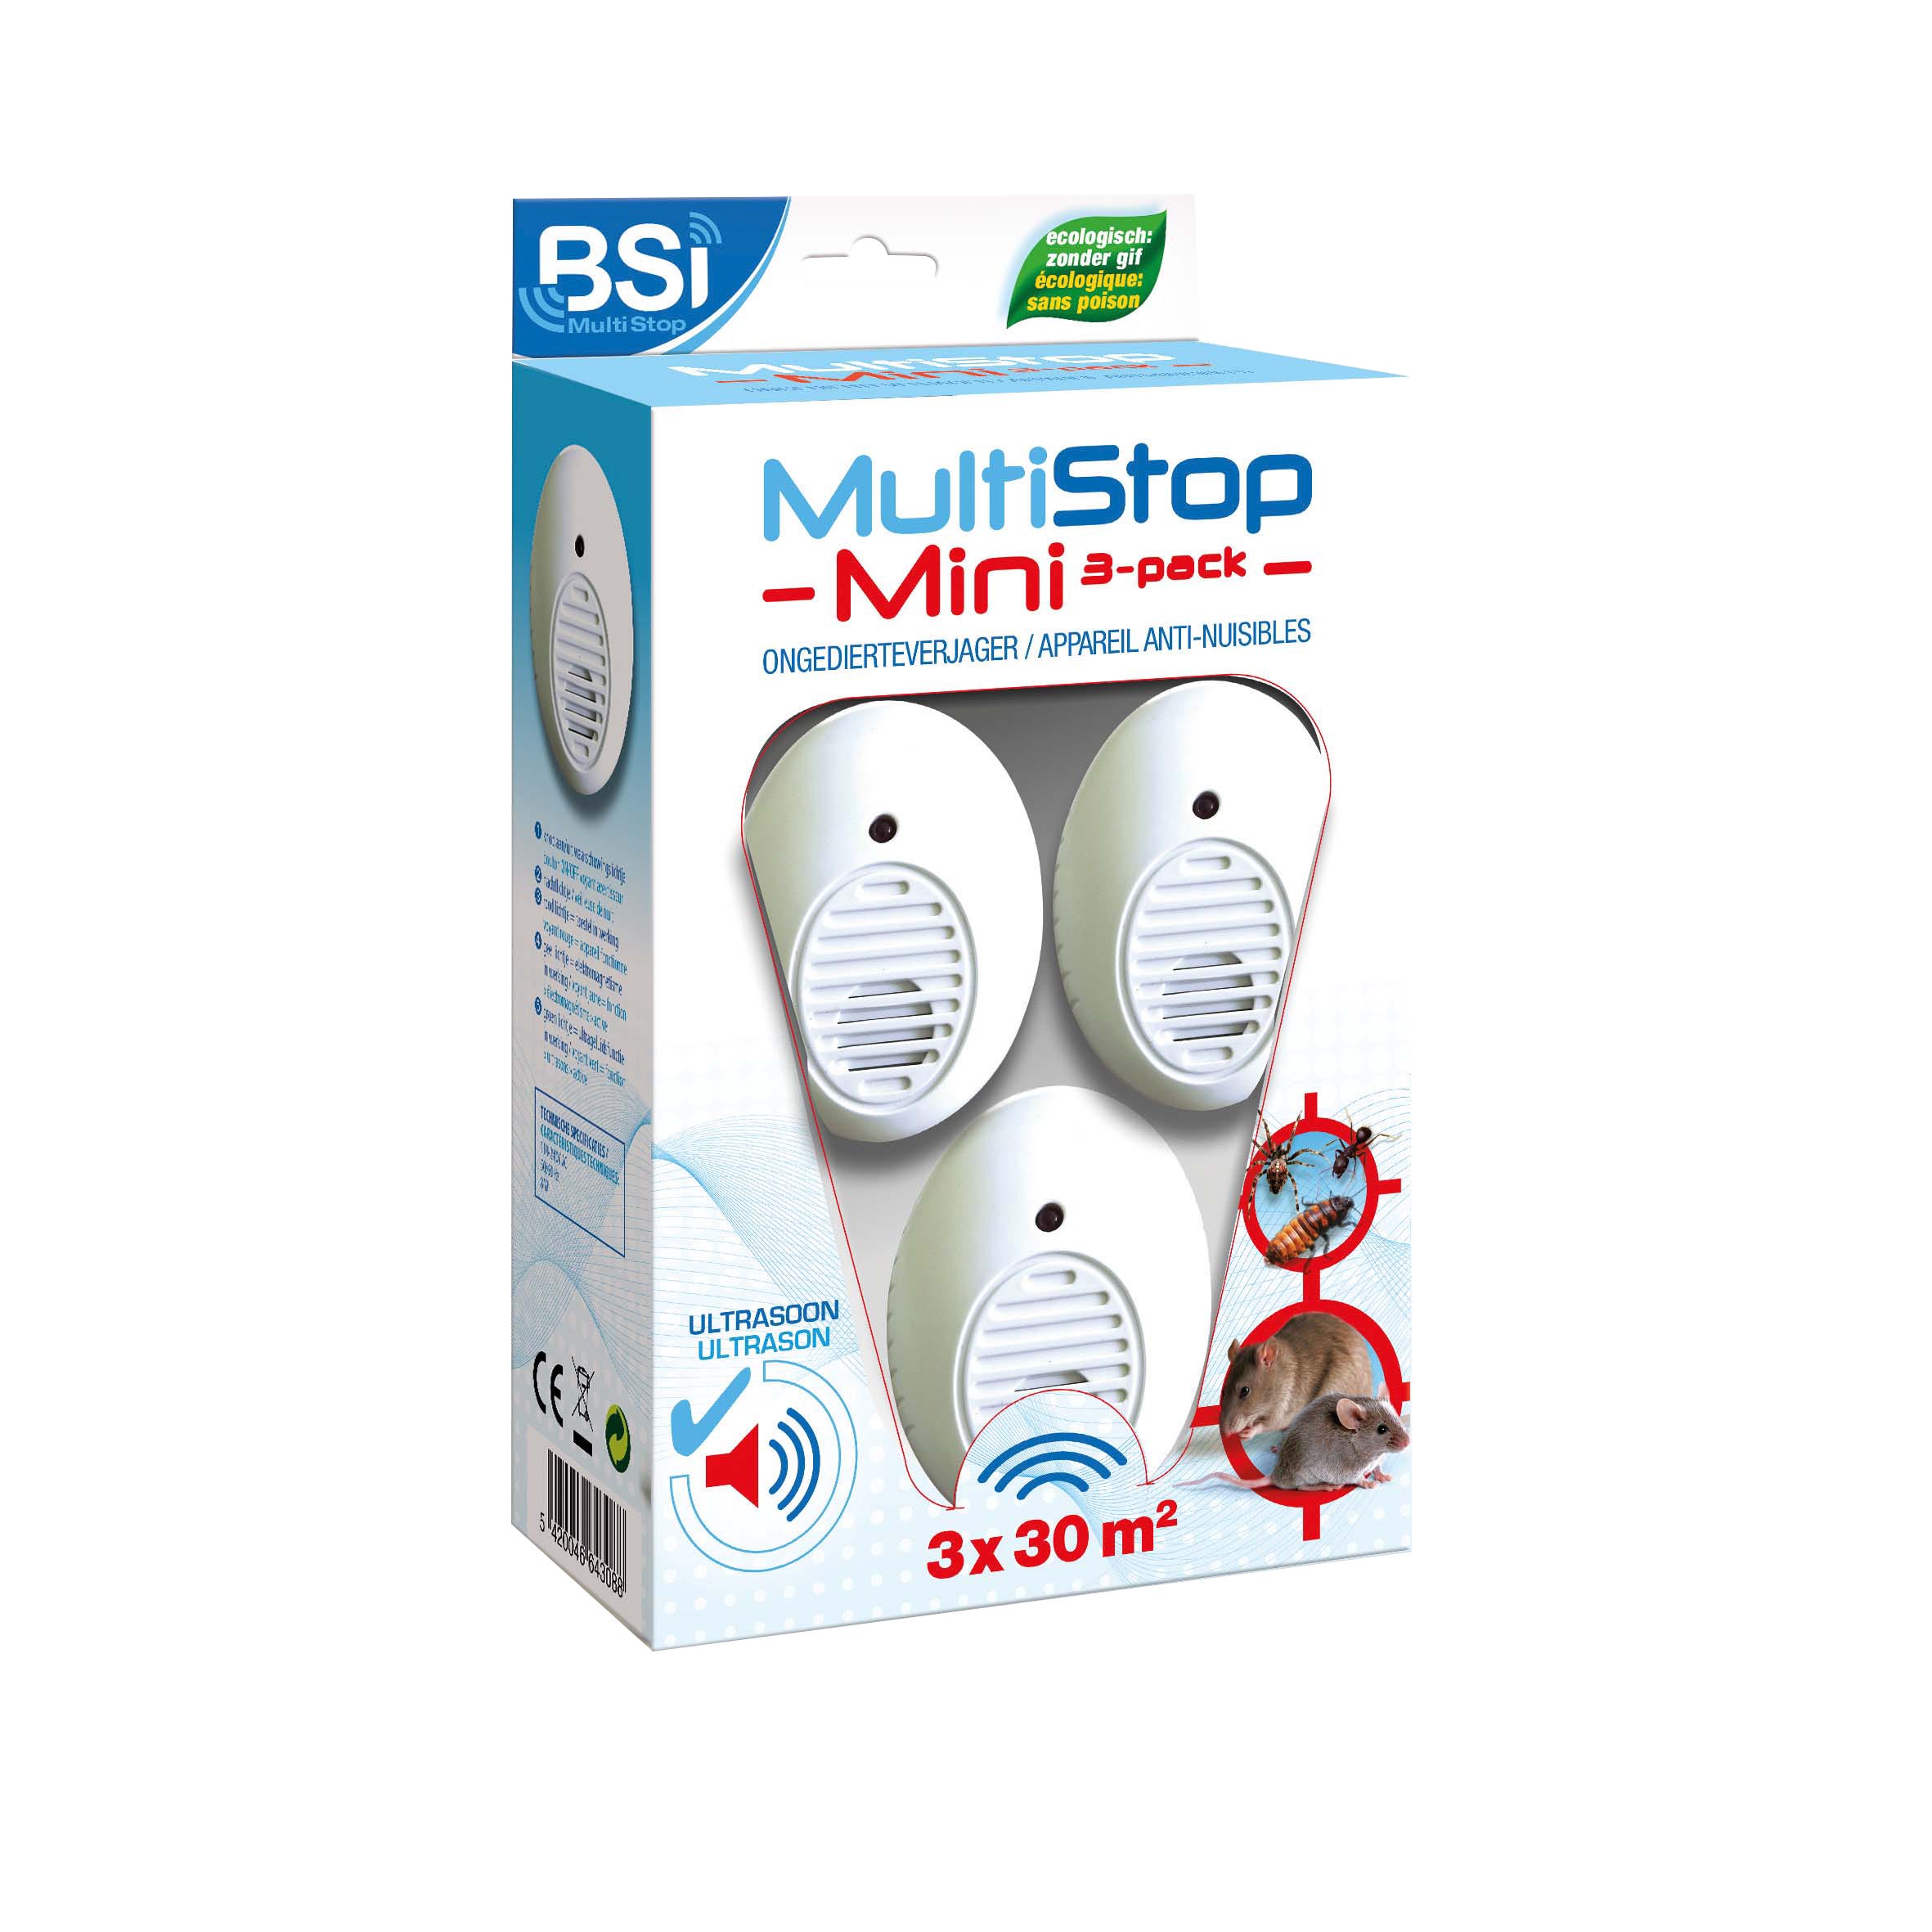 BSI - Multistop Mini 3-Pack - Appareil Anti-Nuisibles - Ultrason - Contre  Insecte/Petit Rongeur - 3 x 30 m²